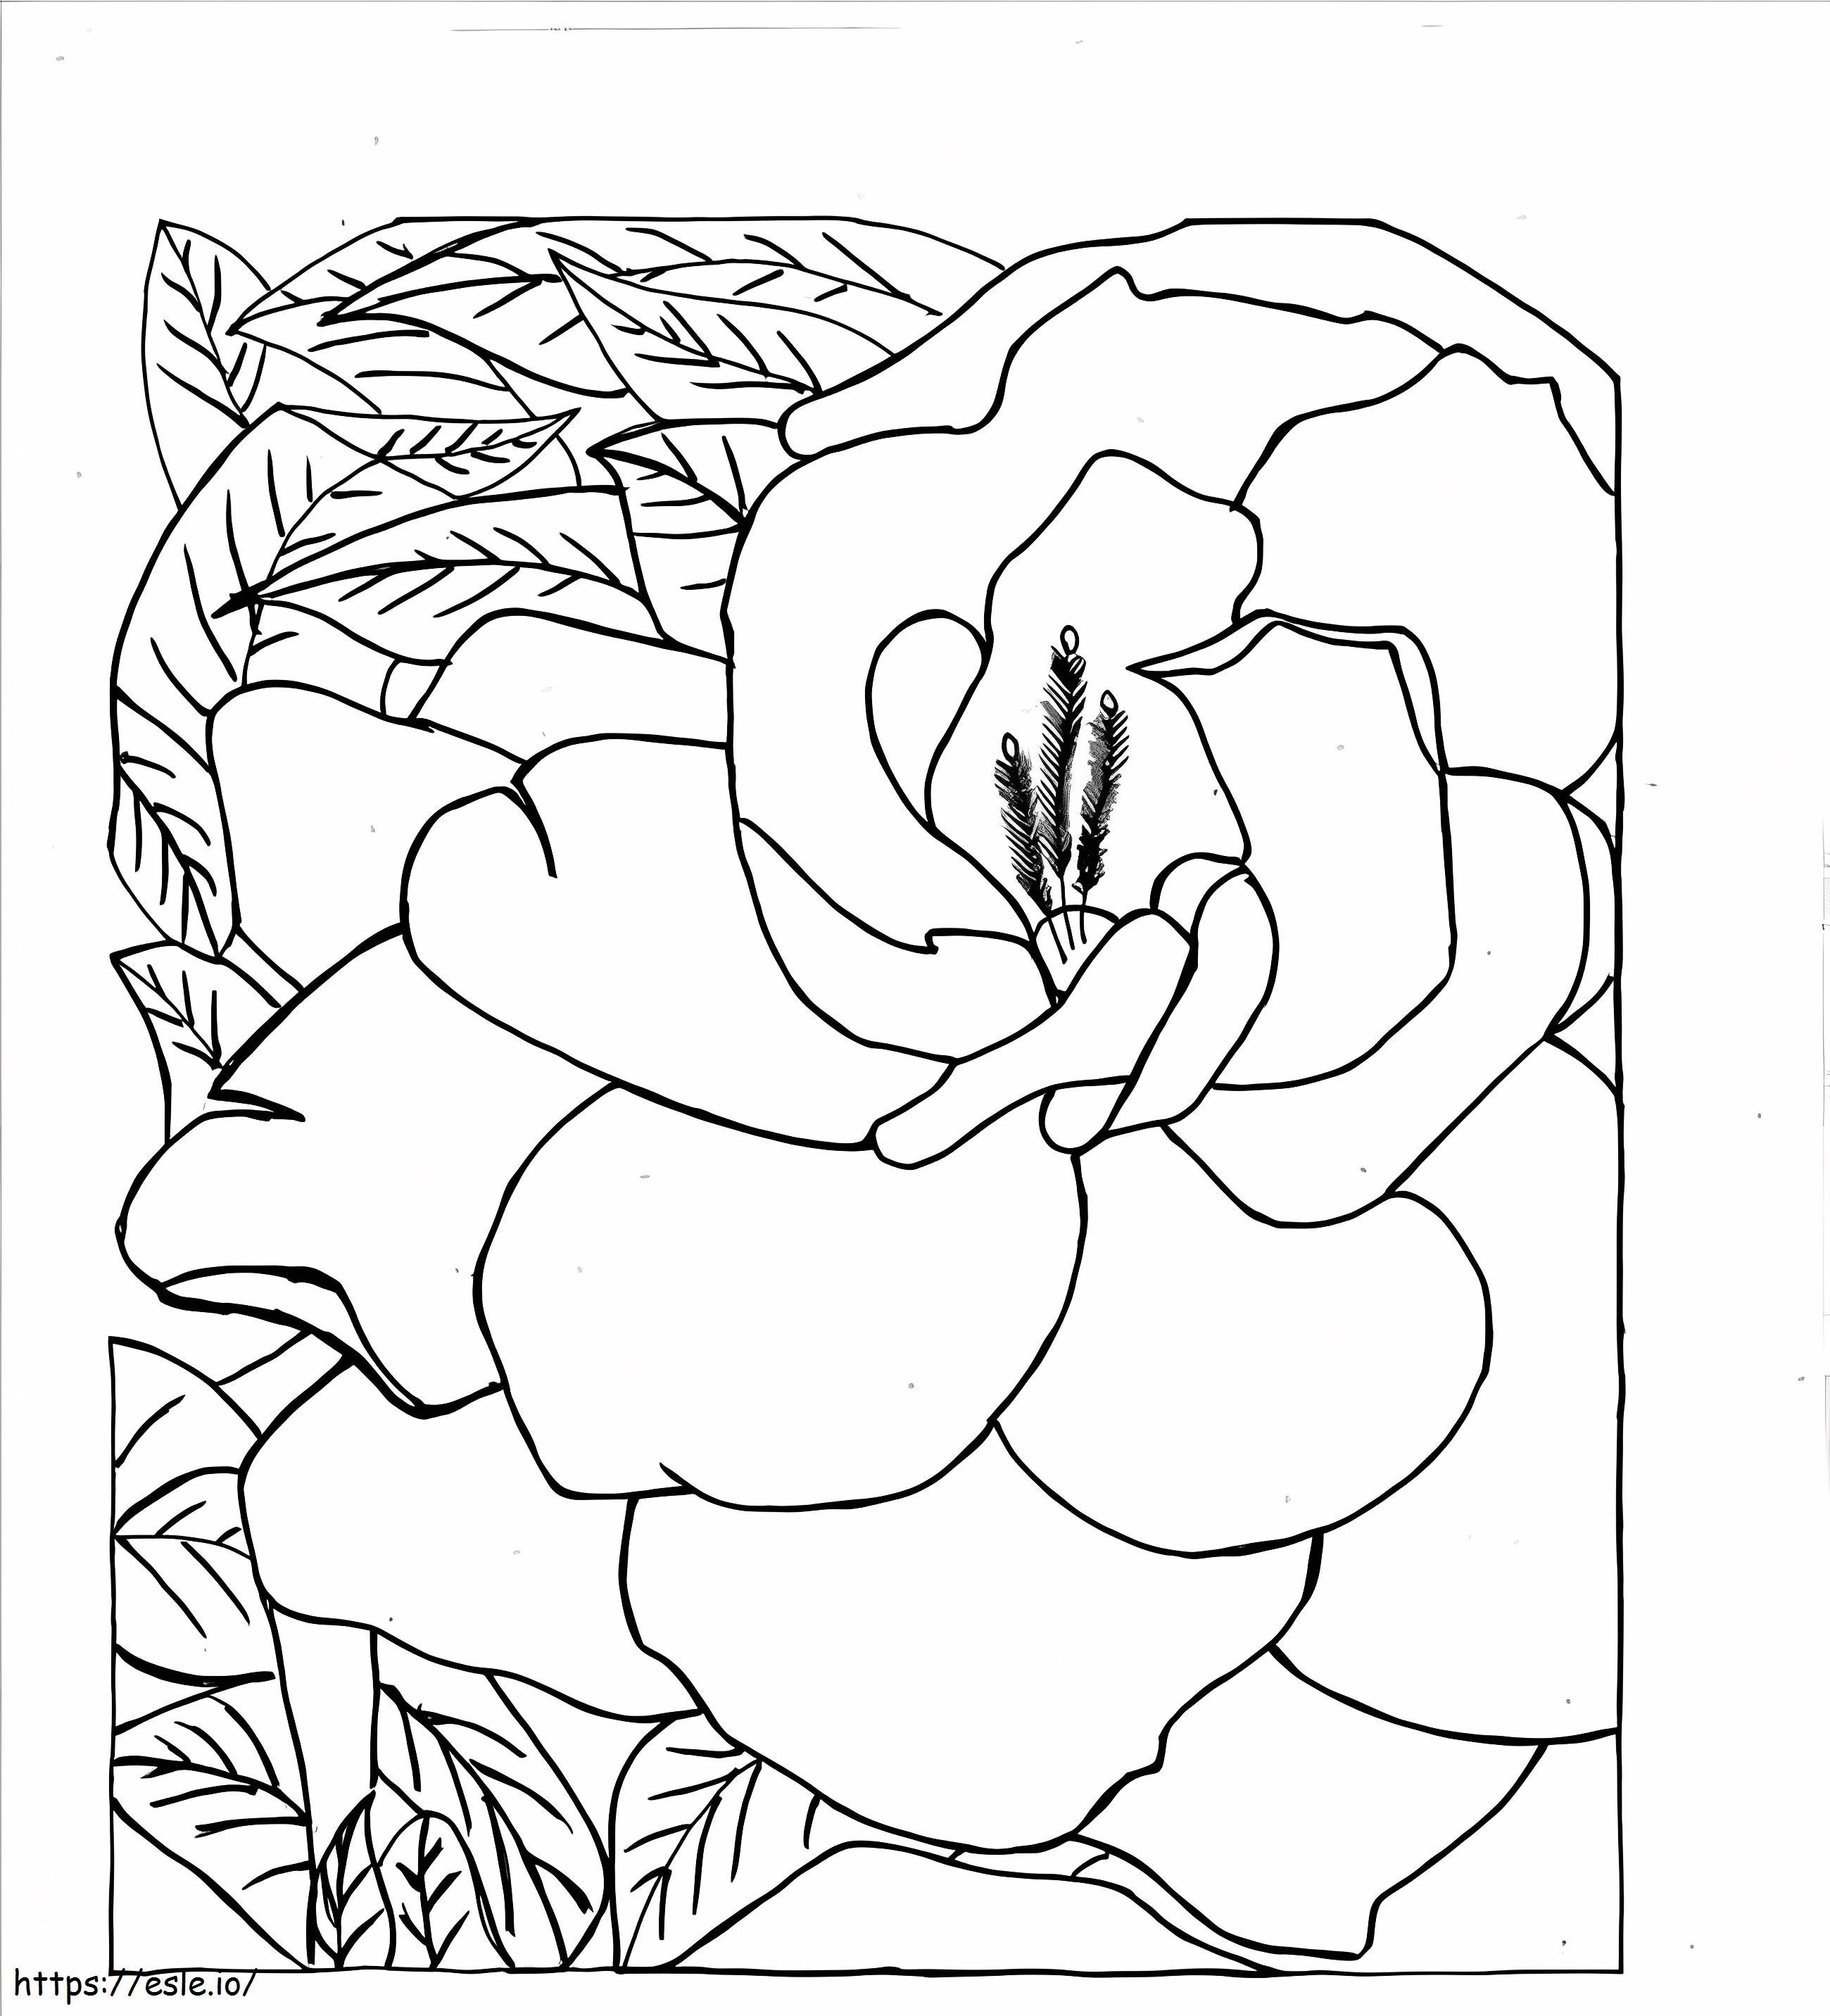 Gran Gardenia coloring page